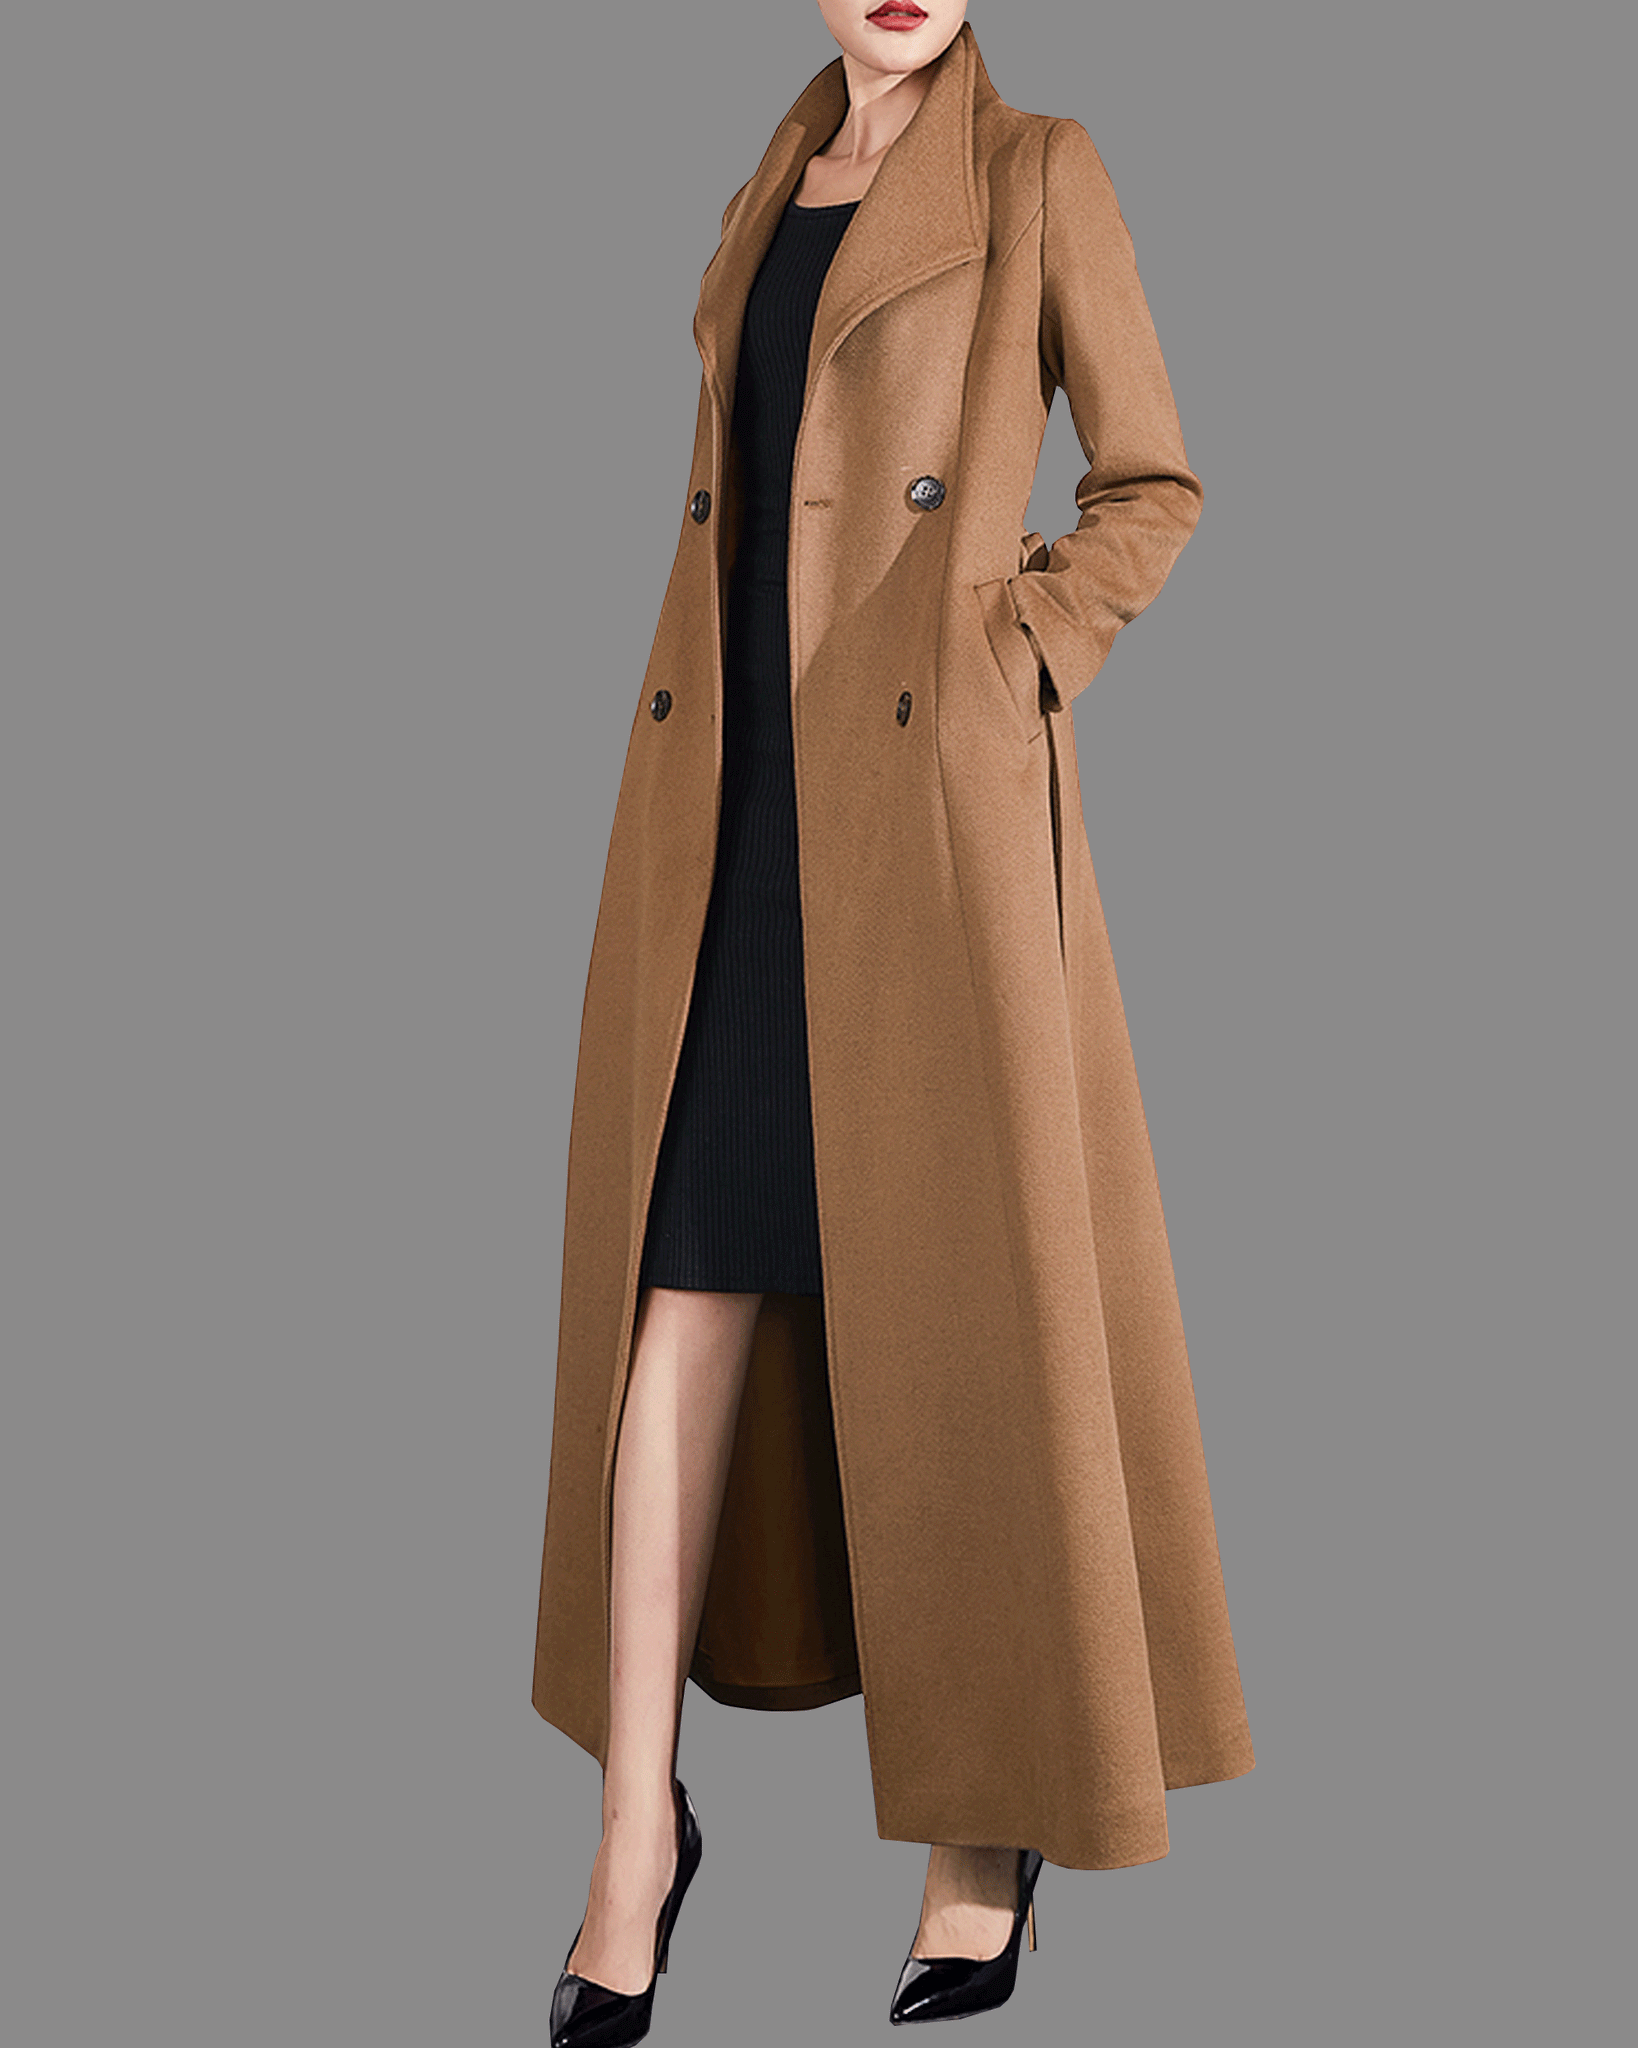 Women's Wool Coats, Wool Jackets & Overcoats